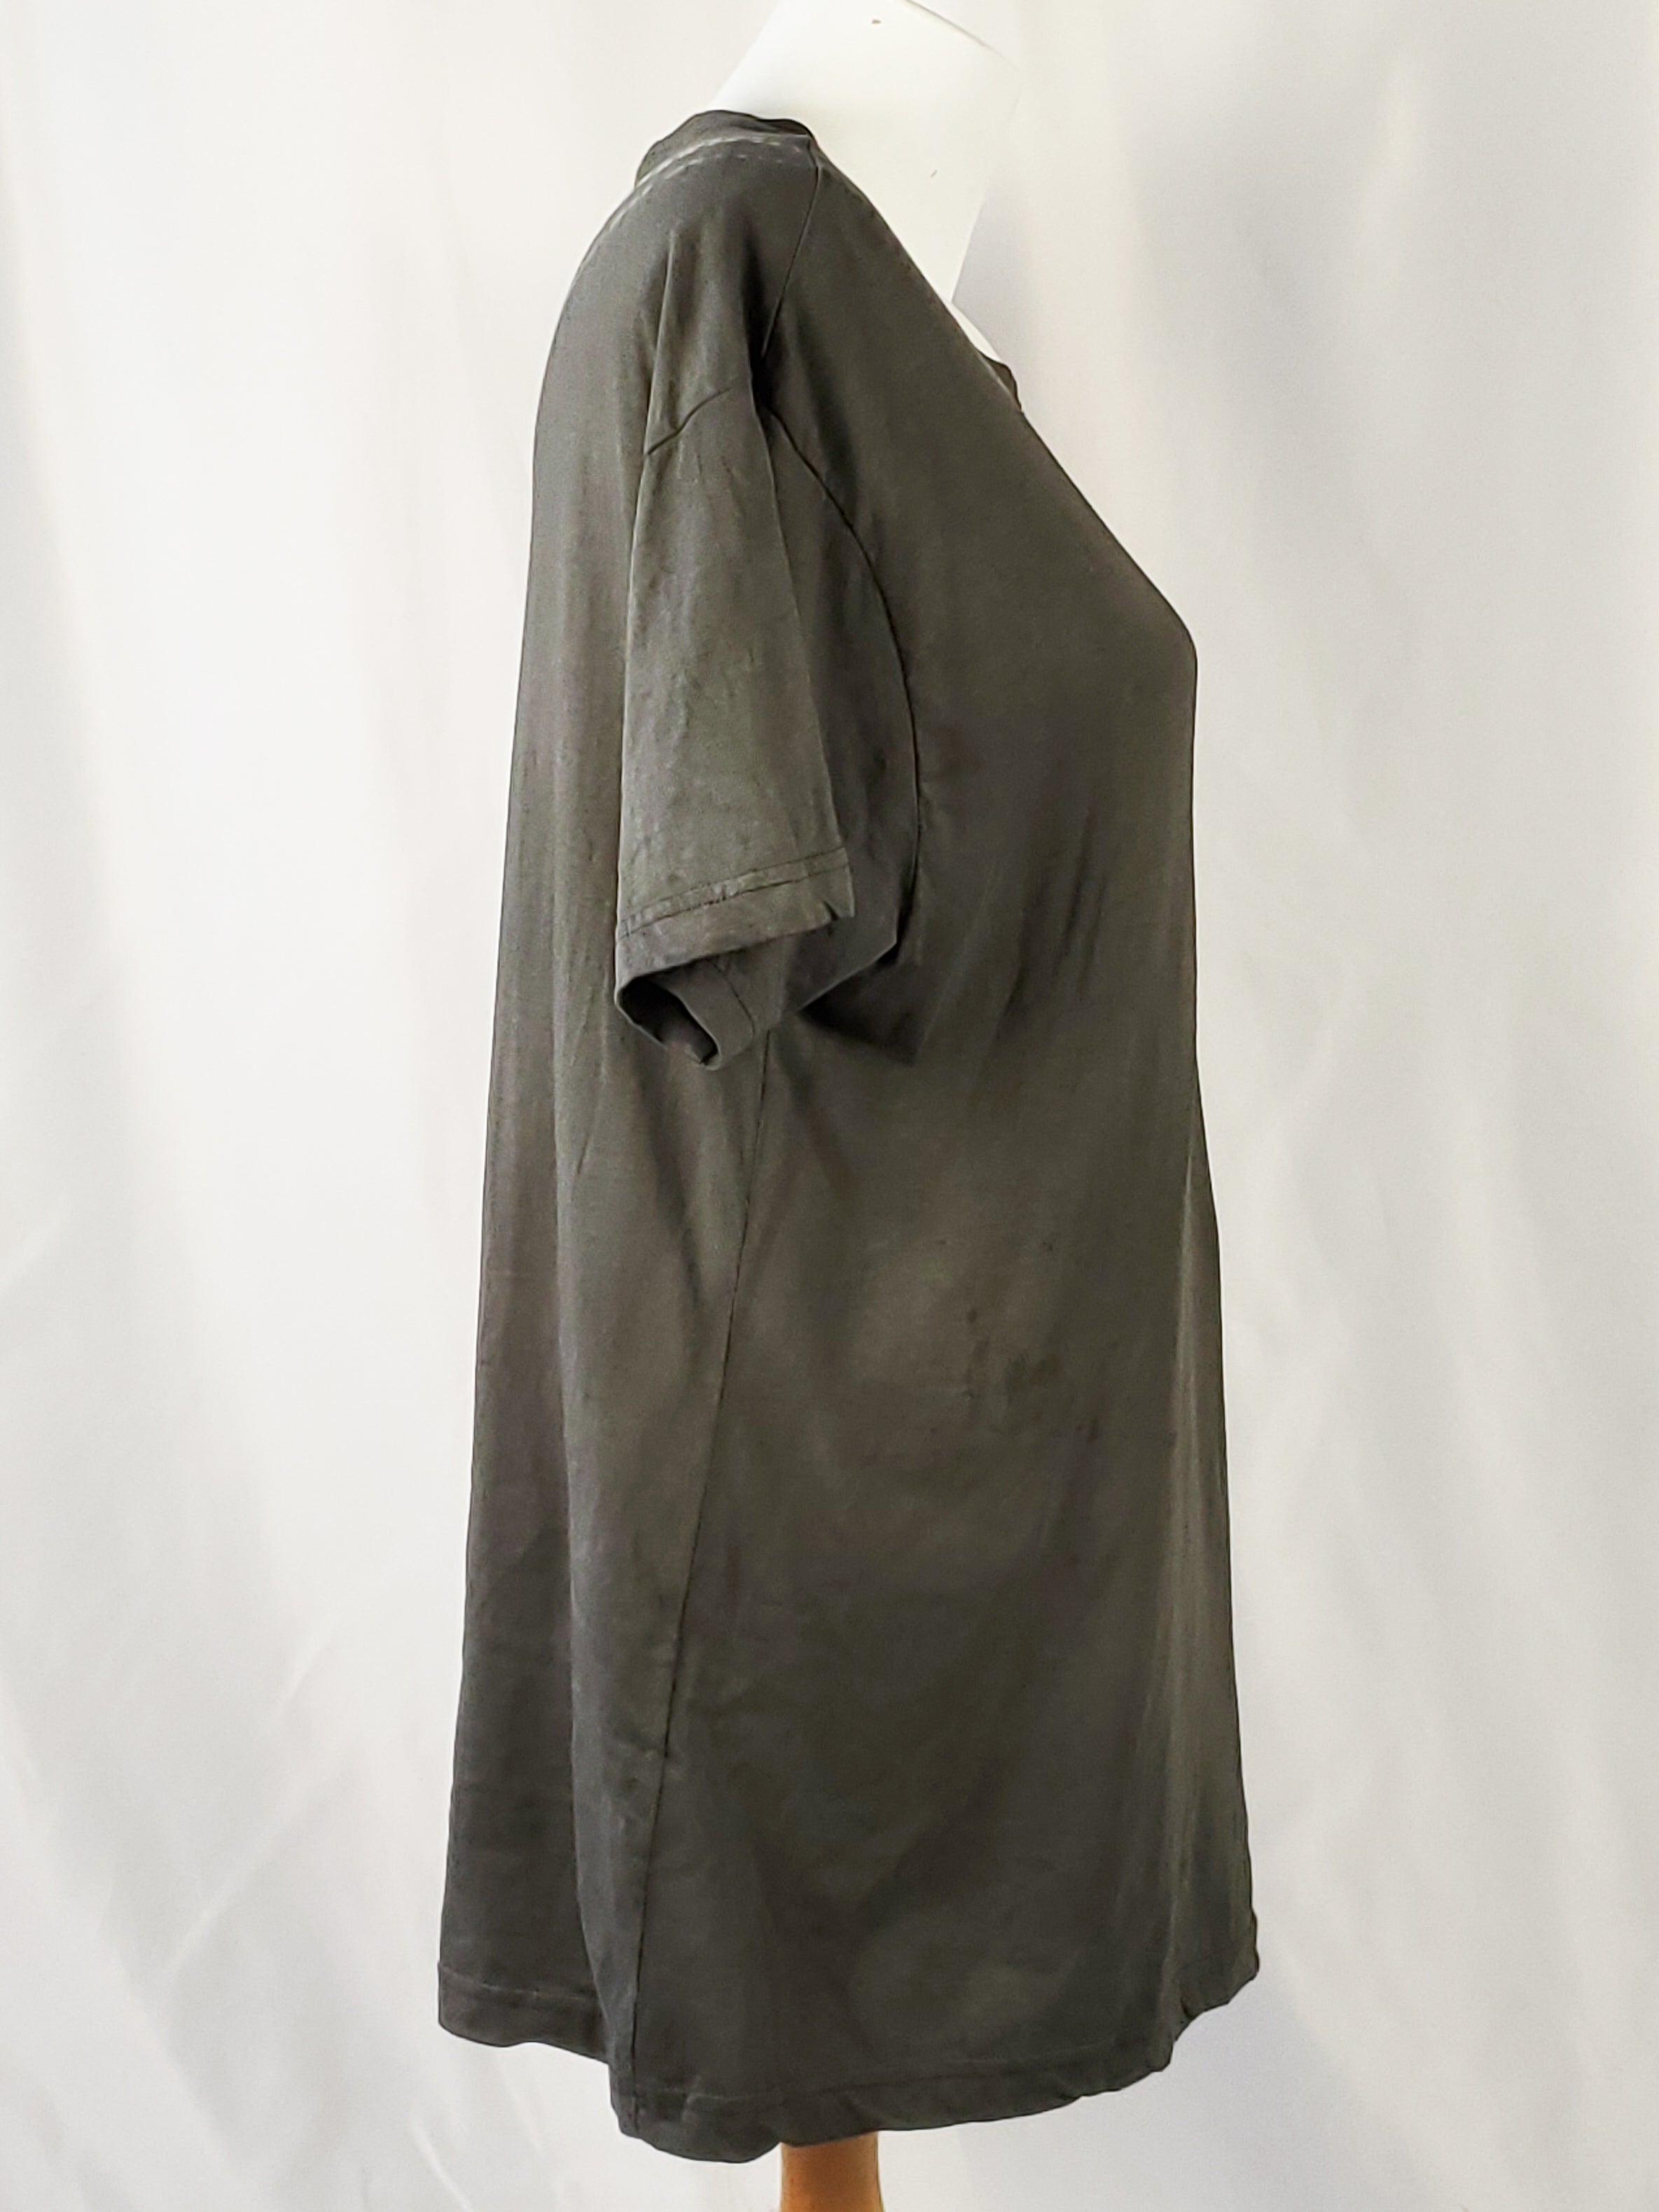 Unisex Charcoal Grey Snake Extra Long Shibori T Shirt - L - The Caffeinated Raven